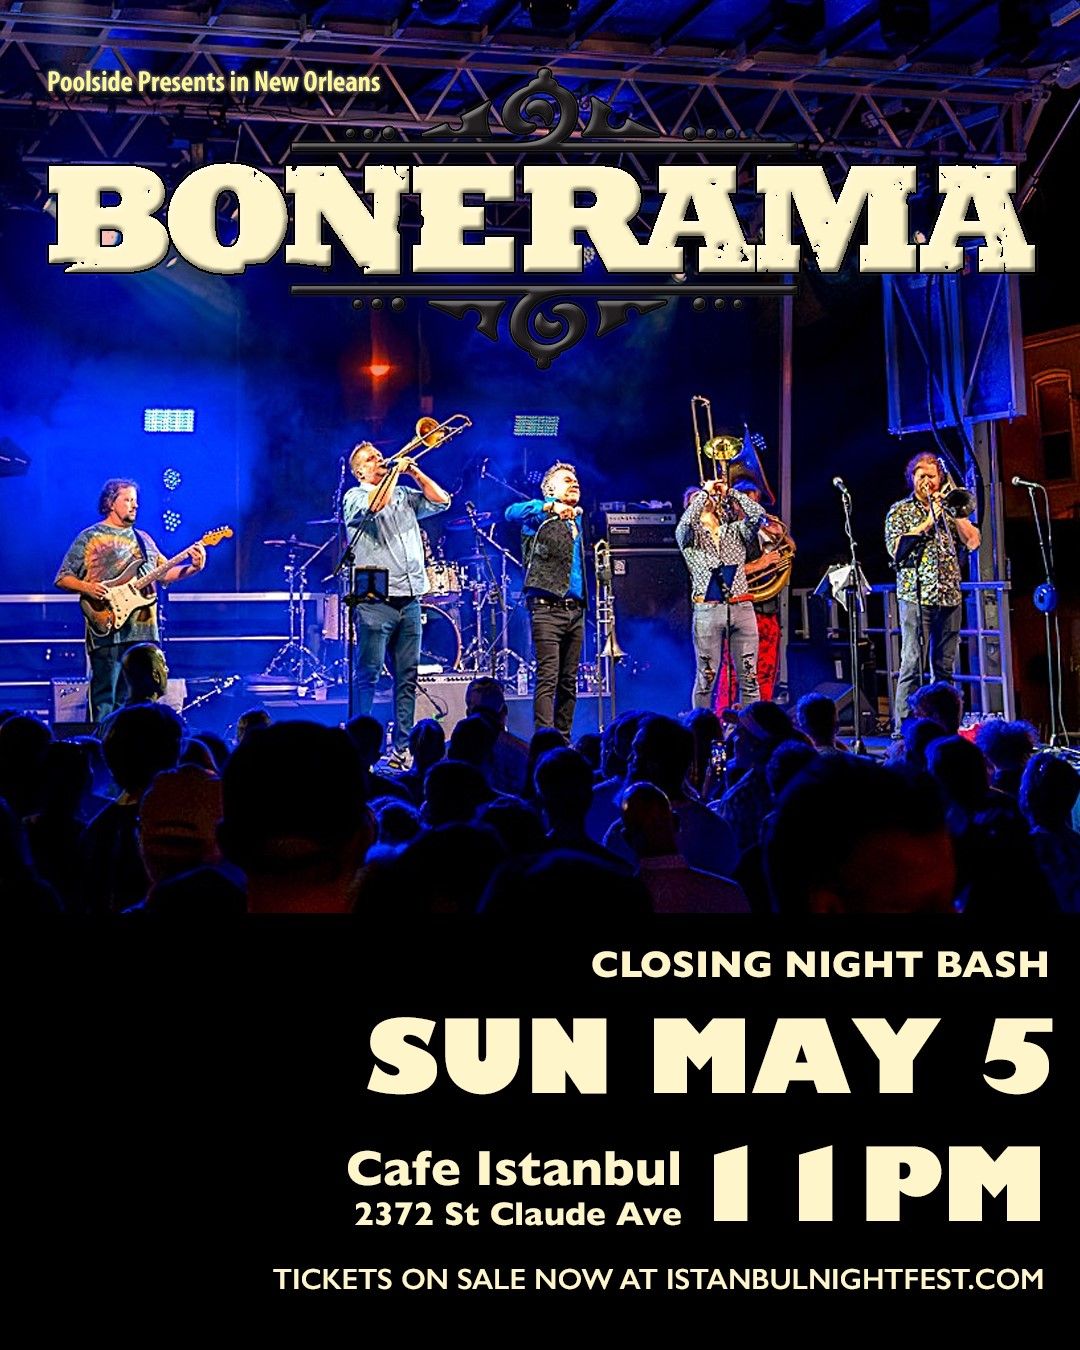 BONERAMA's End-Of-Fest Bash!